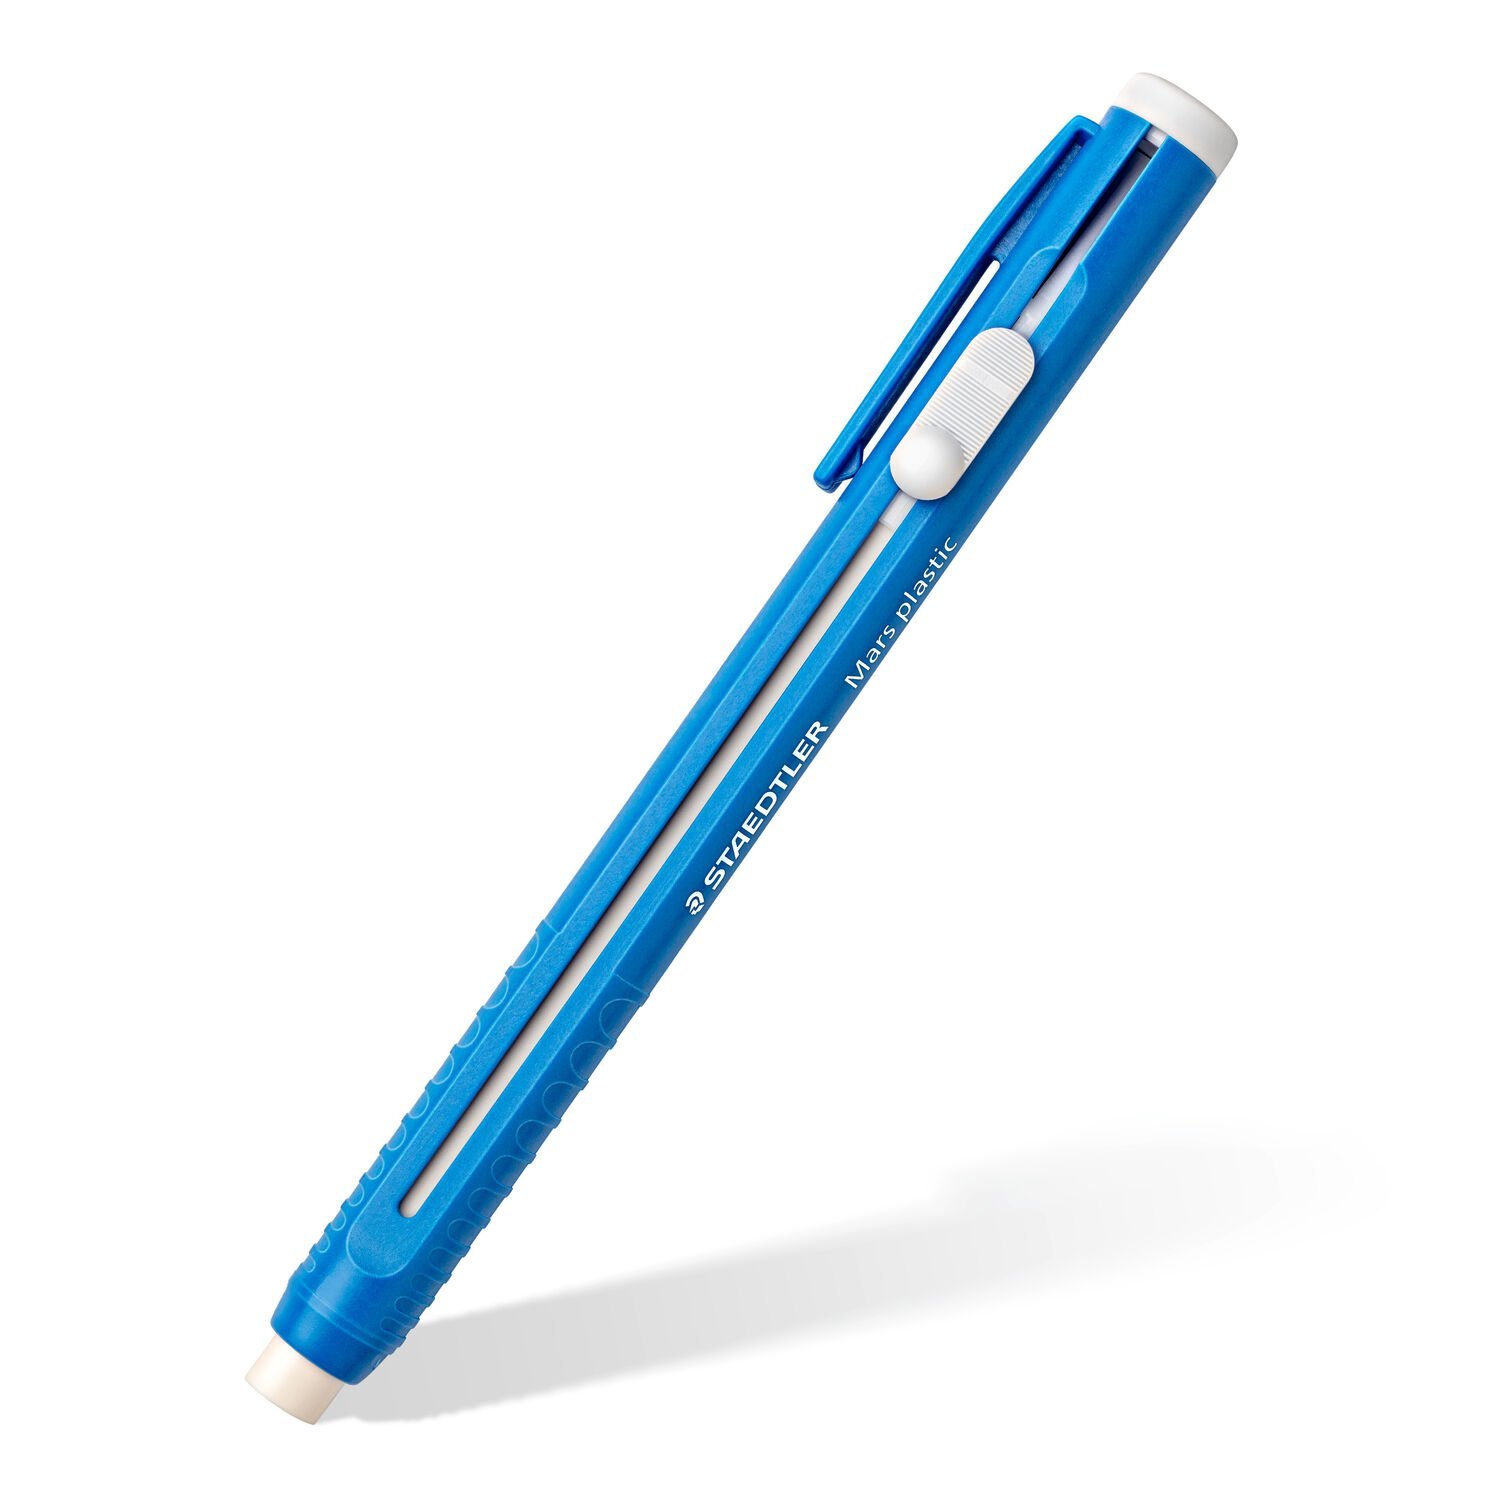 Mars® plastic 528 - Eraser holder